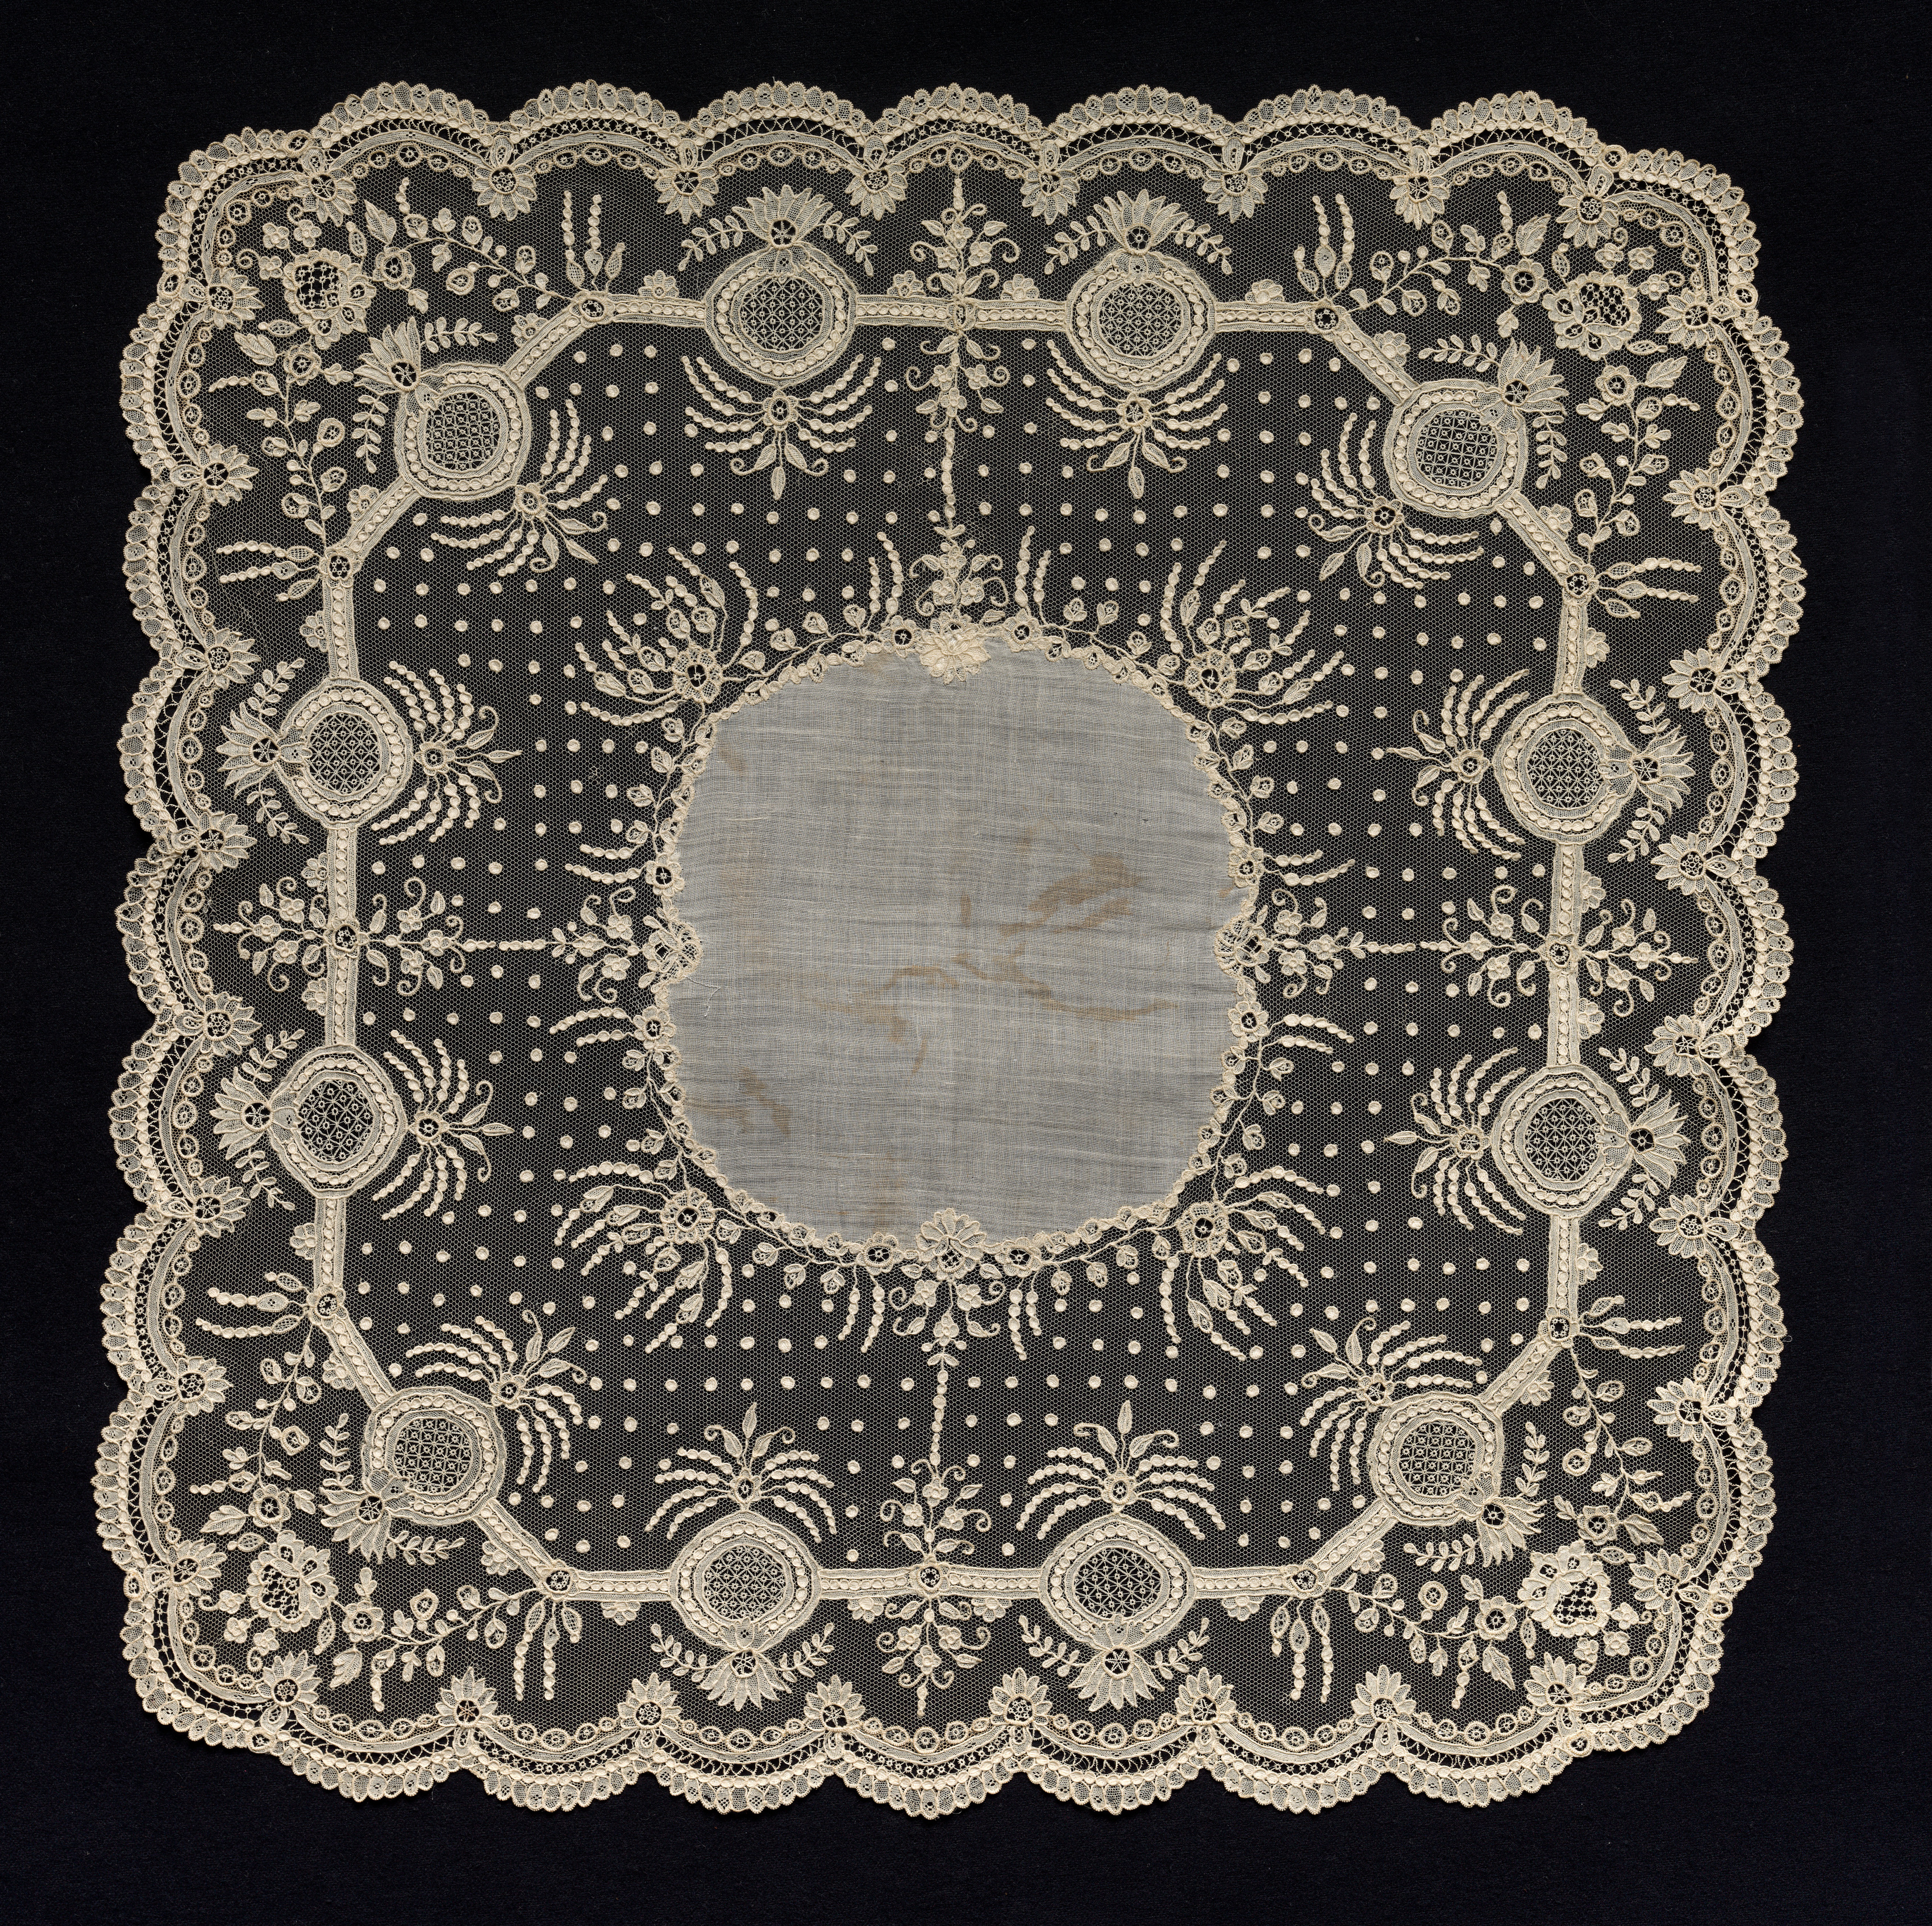 Needlepoint Lace (Alençon Lace) Handkerchief